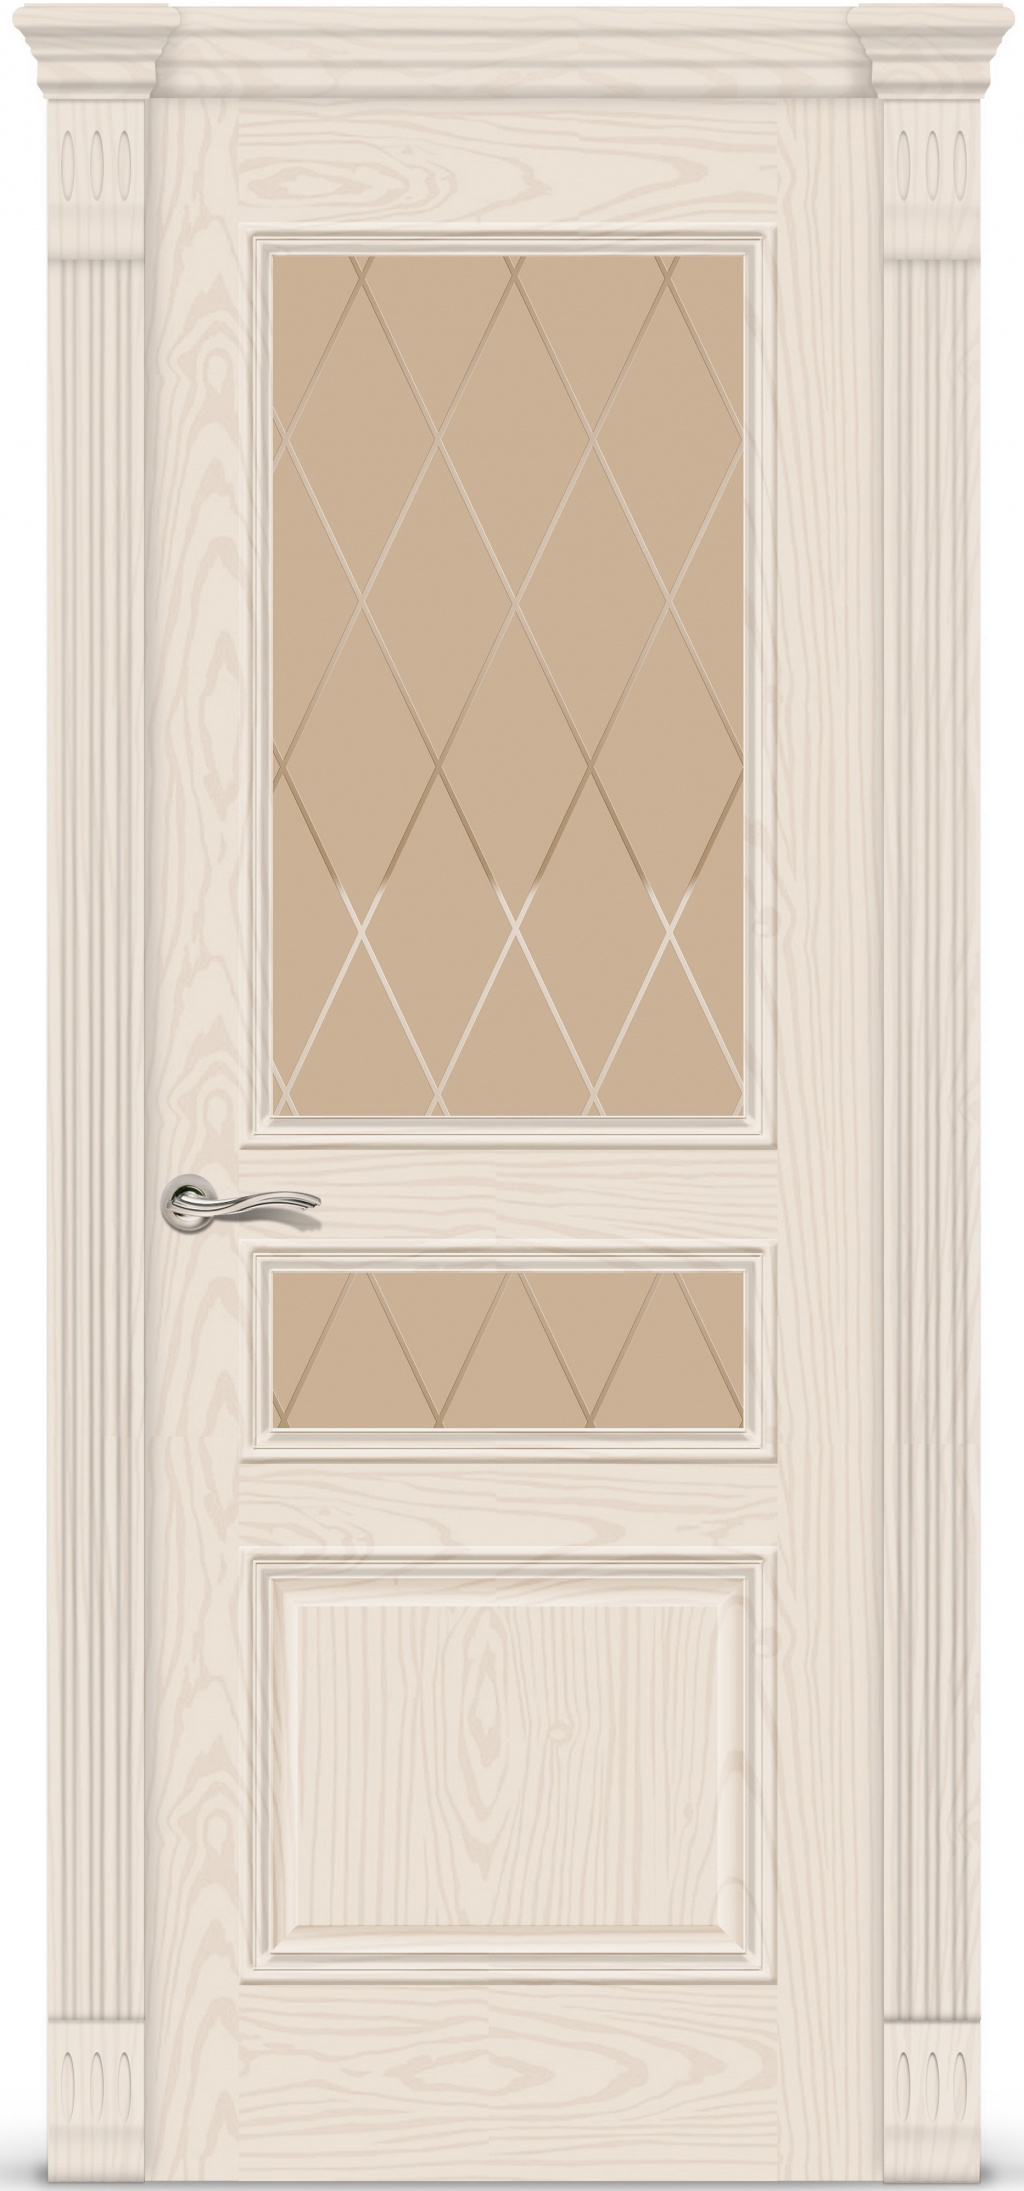 СитиДорс Межкомнатная дверь Лувр 2 ПО Ромбы, арт. 6554 - фото №1